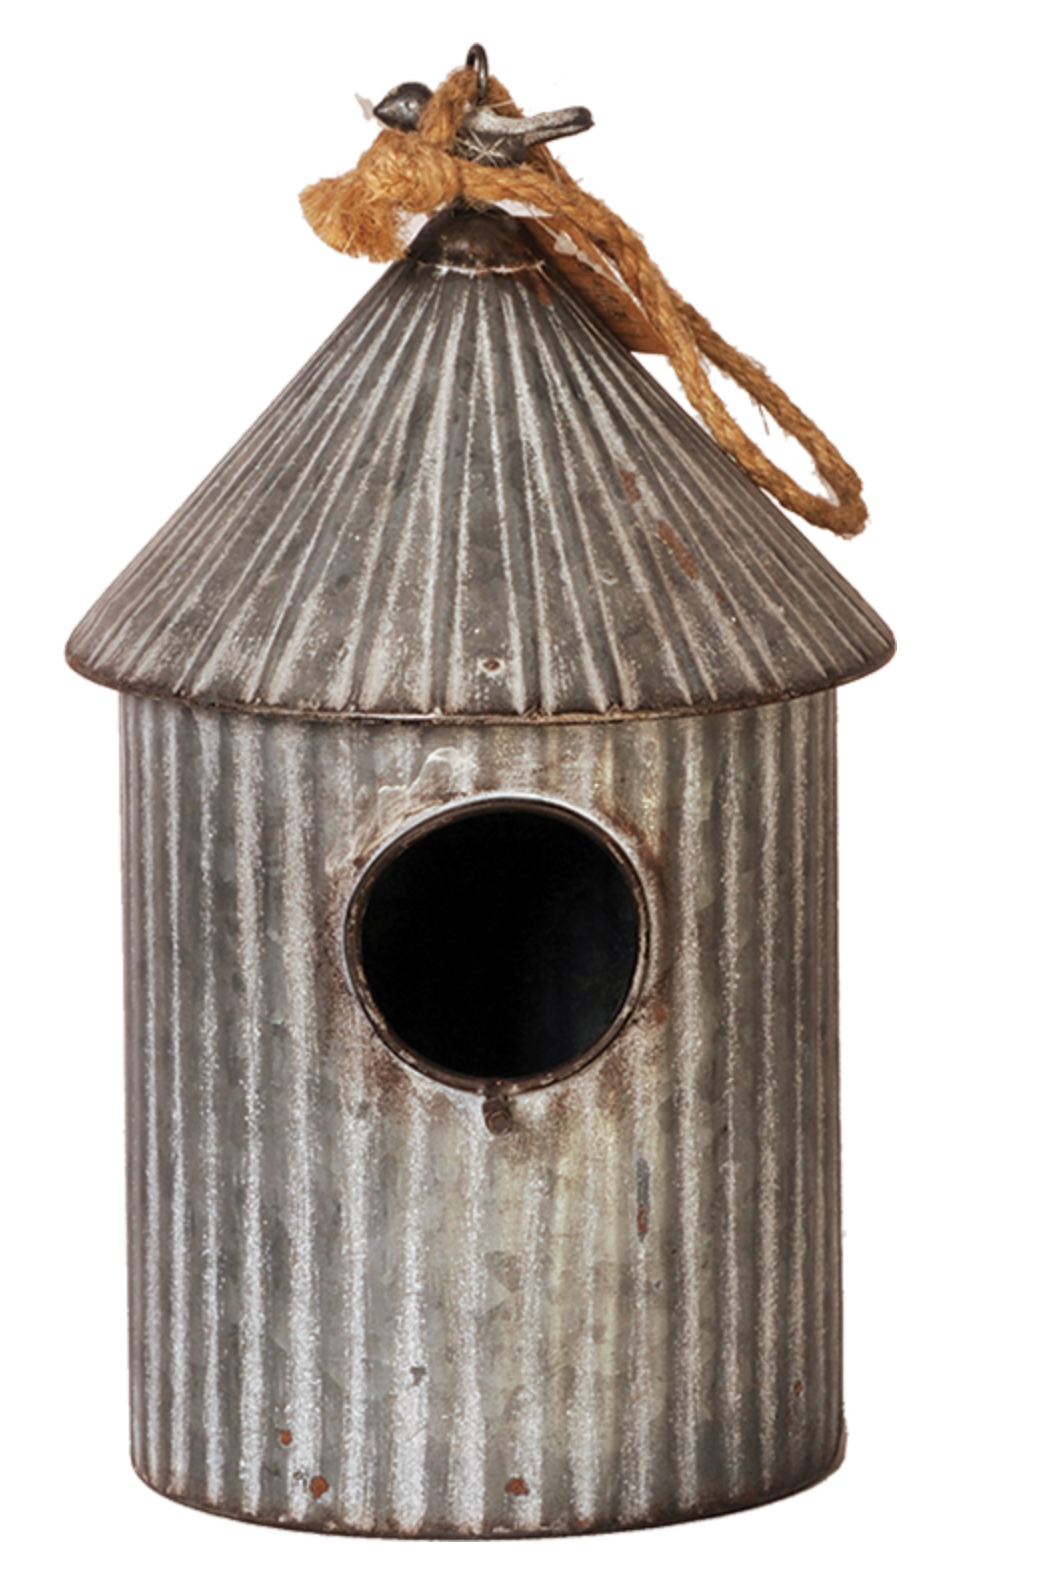 Turret-Style Birdhouse